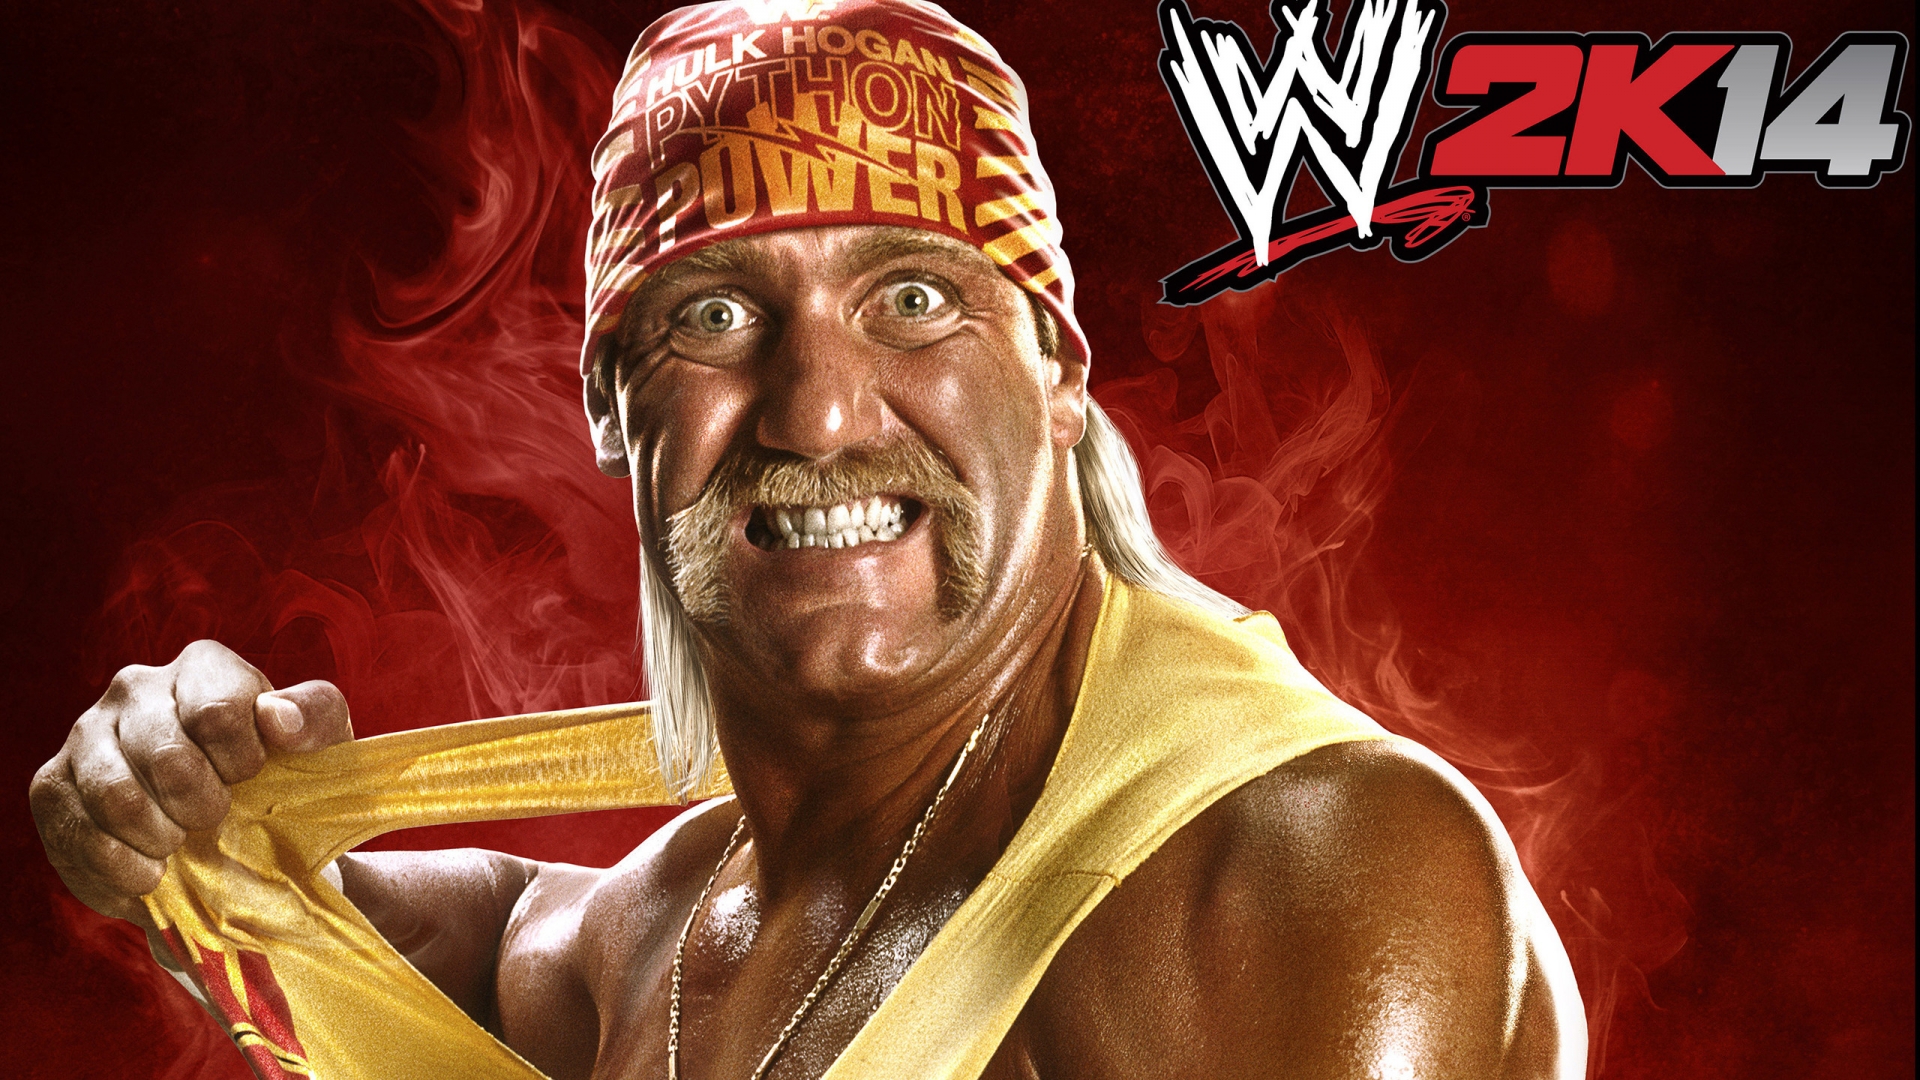 Hulk Hogan WWE2K14 for 1920 x 1080 HDTV 1080p resolution